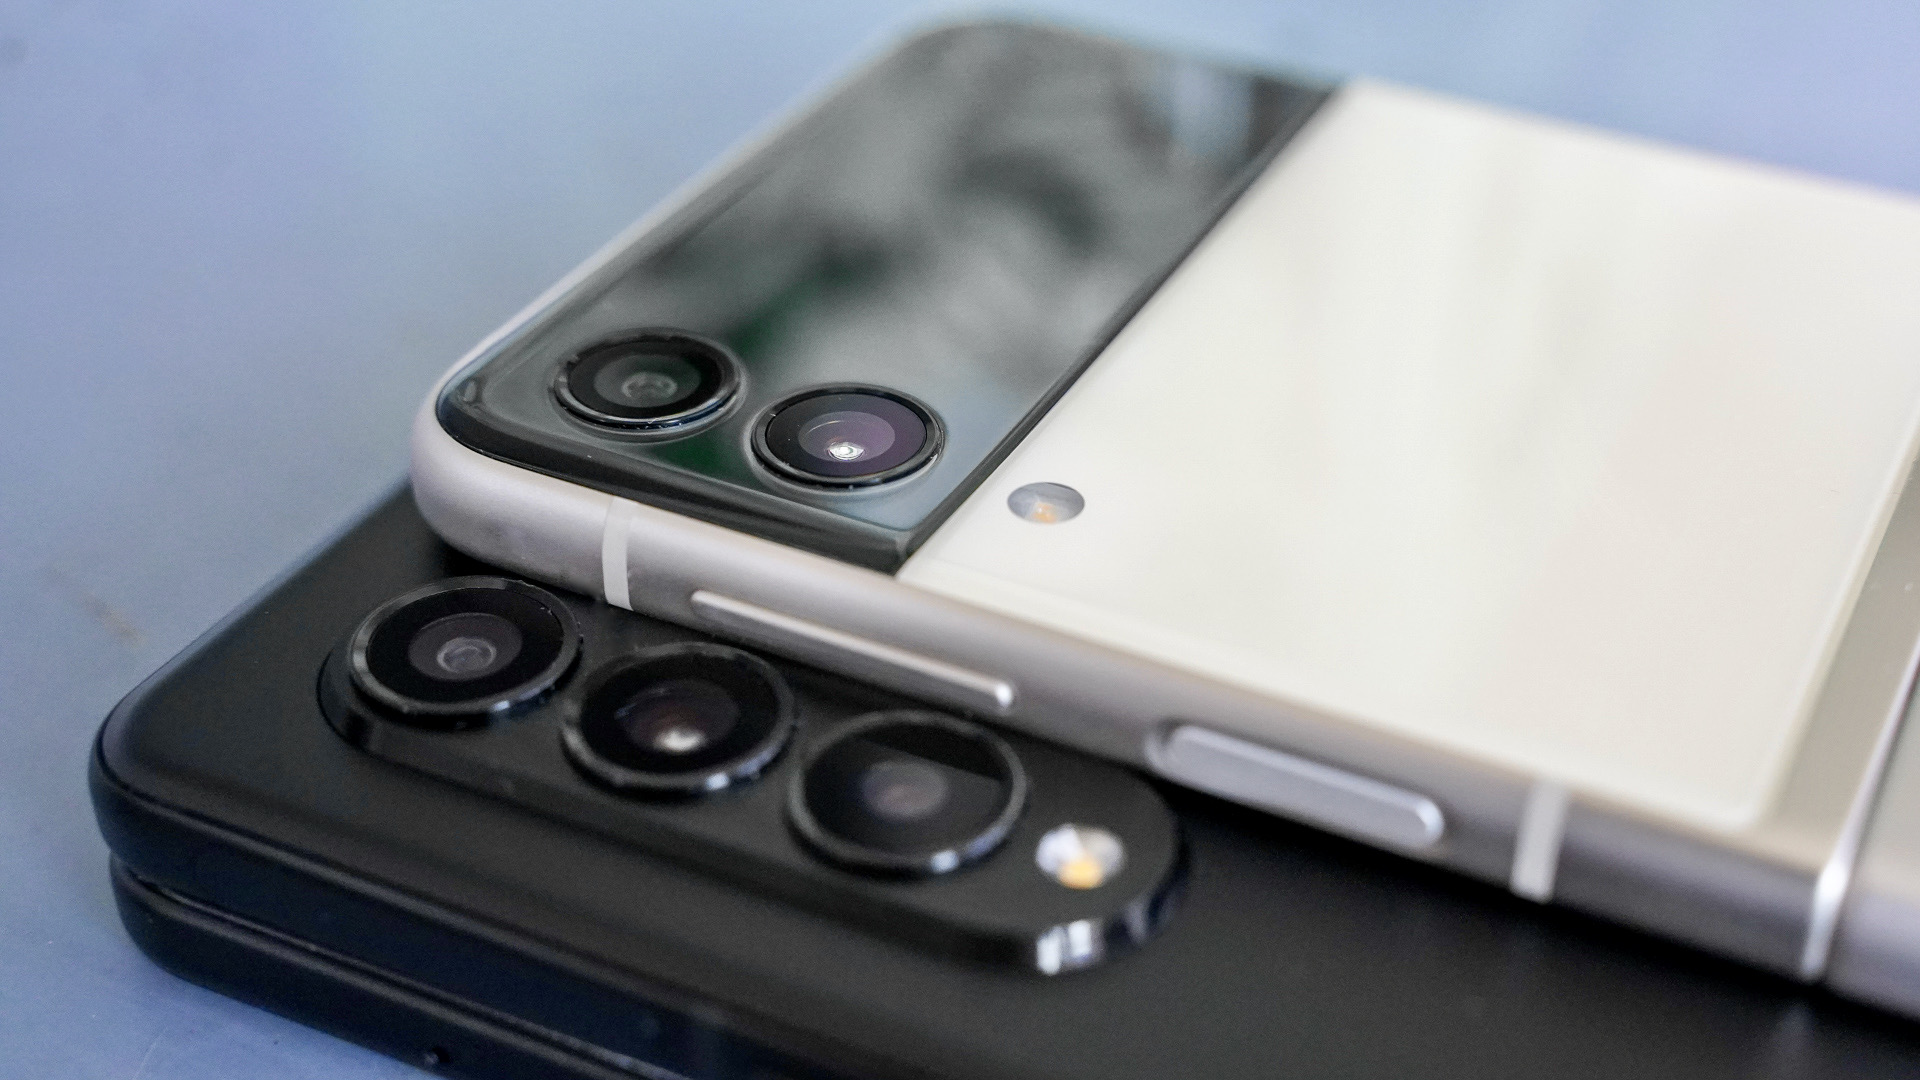 Samsung Galaxy Z Fold vs Z Flip camera closeup showing the rear camera module on both phones.